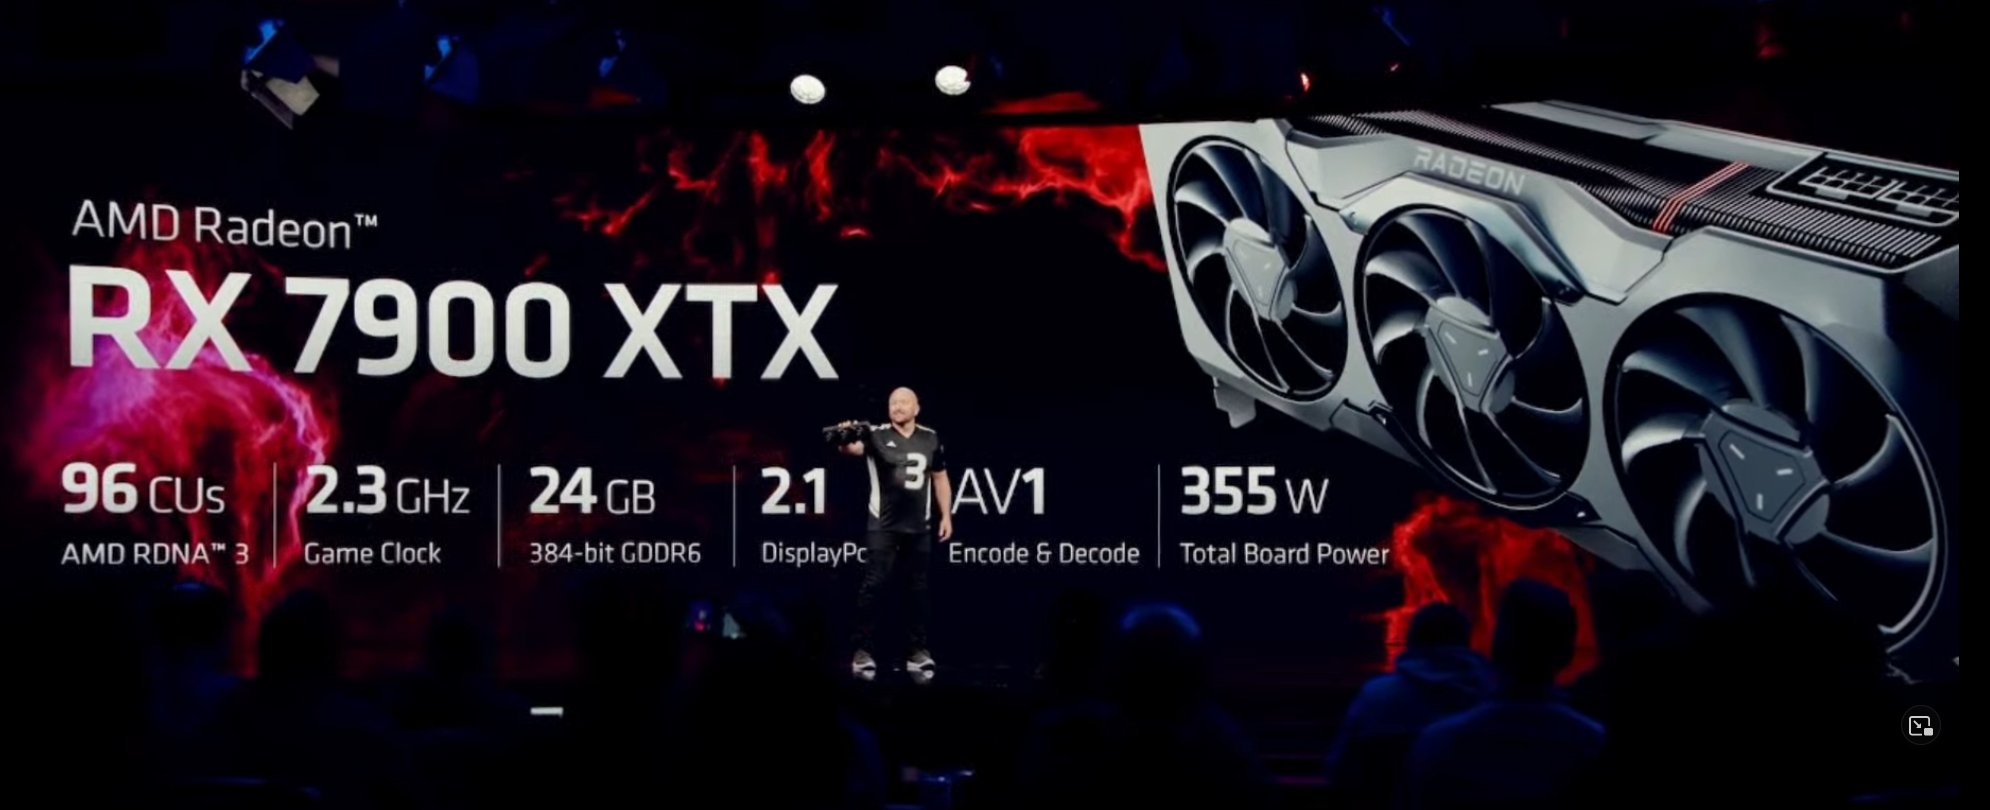 AMD Radeon RX 7900 XTX announced with 24 GB VRAM, 355 W TGP and a